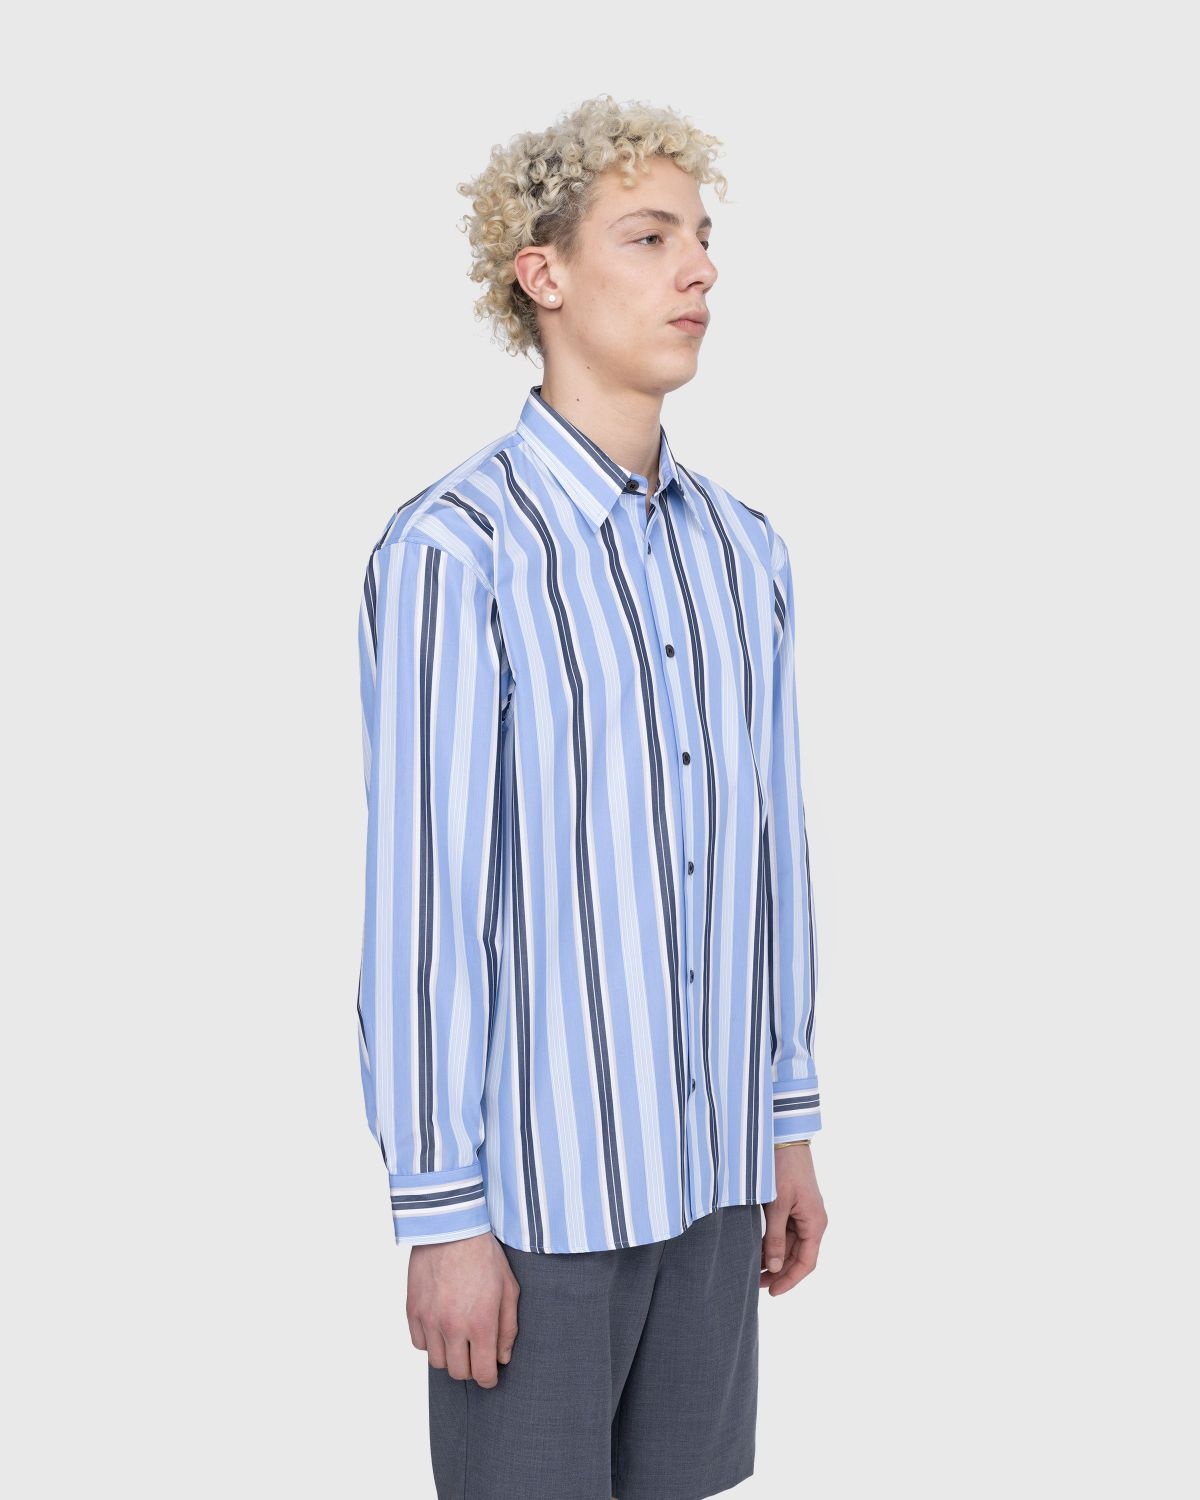 Dries van Noten – Croom Shirt Light Blue - 4